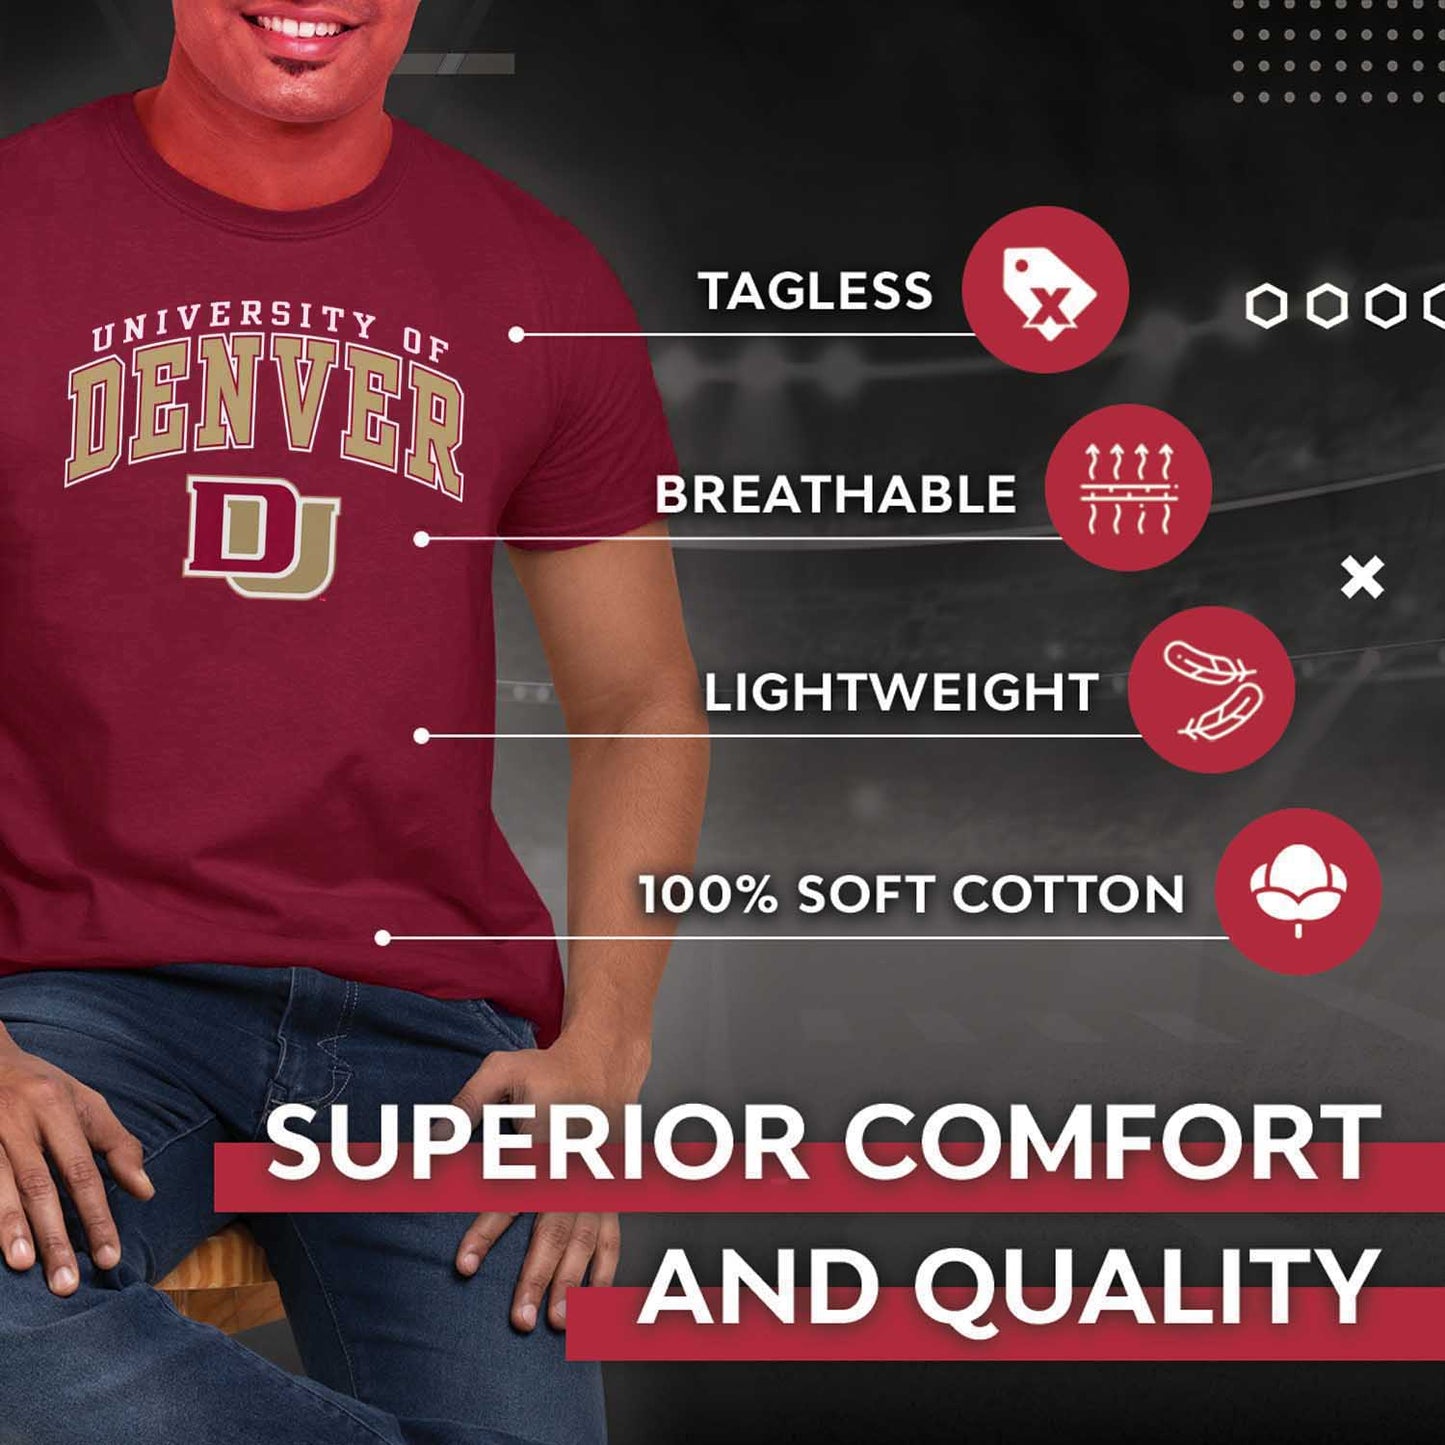 Denver Pioneers NCAA Adult Gameday Cotton T-Shirt - Maroon